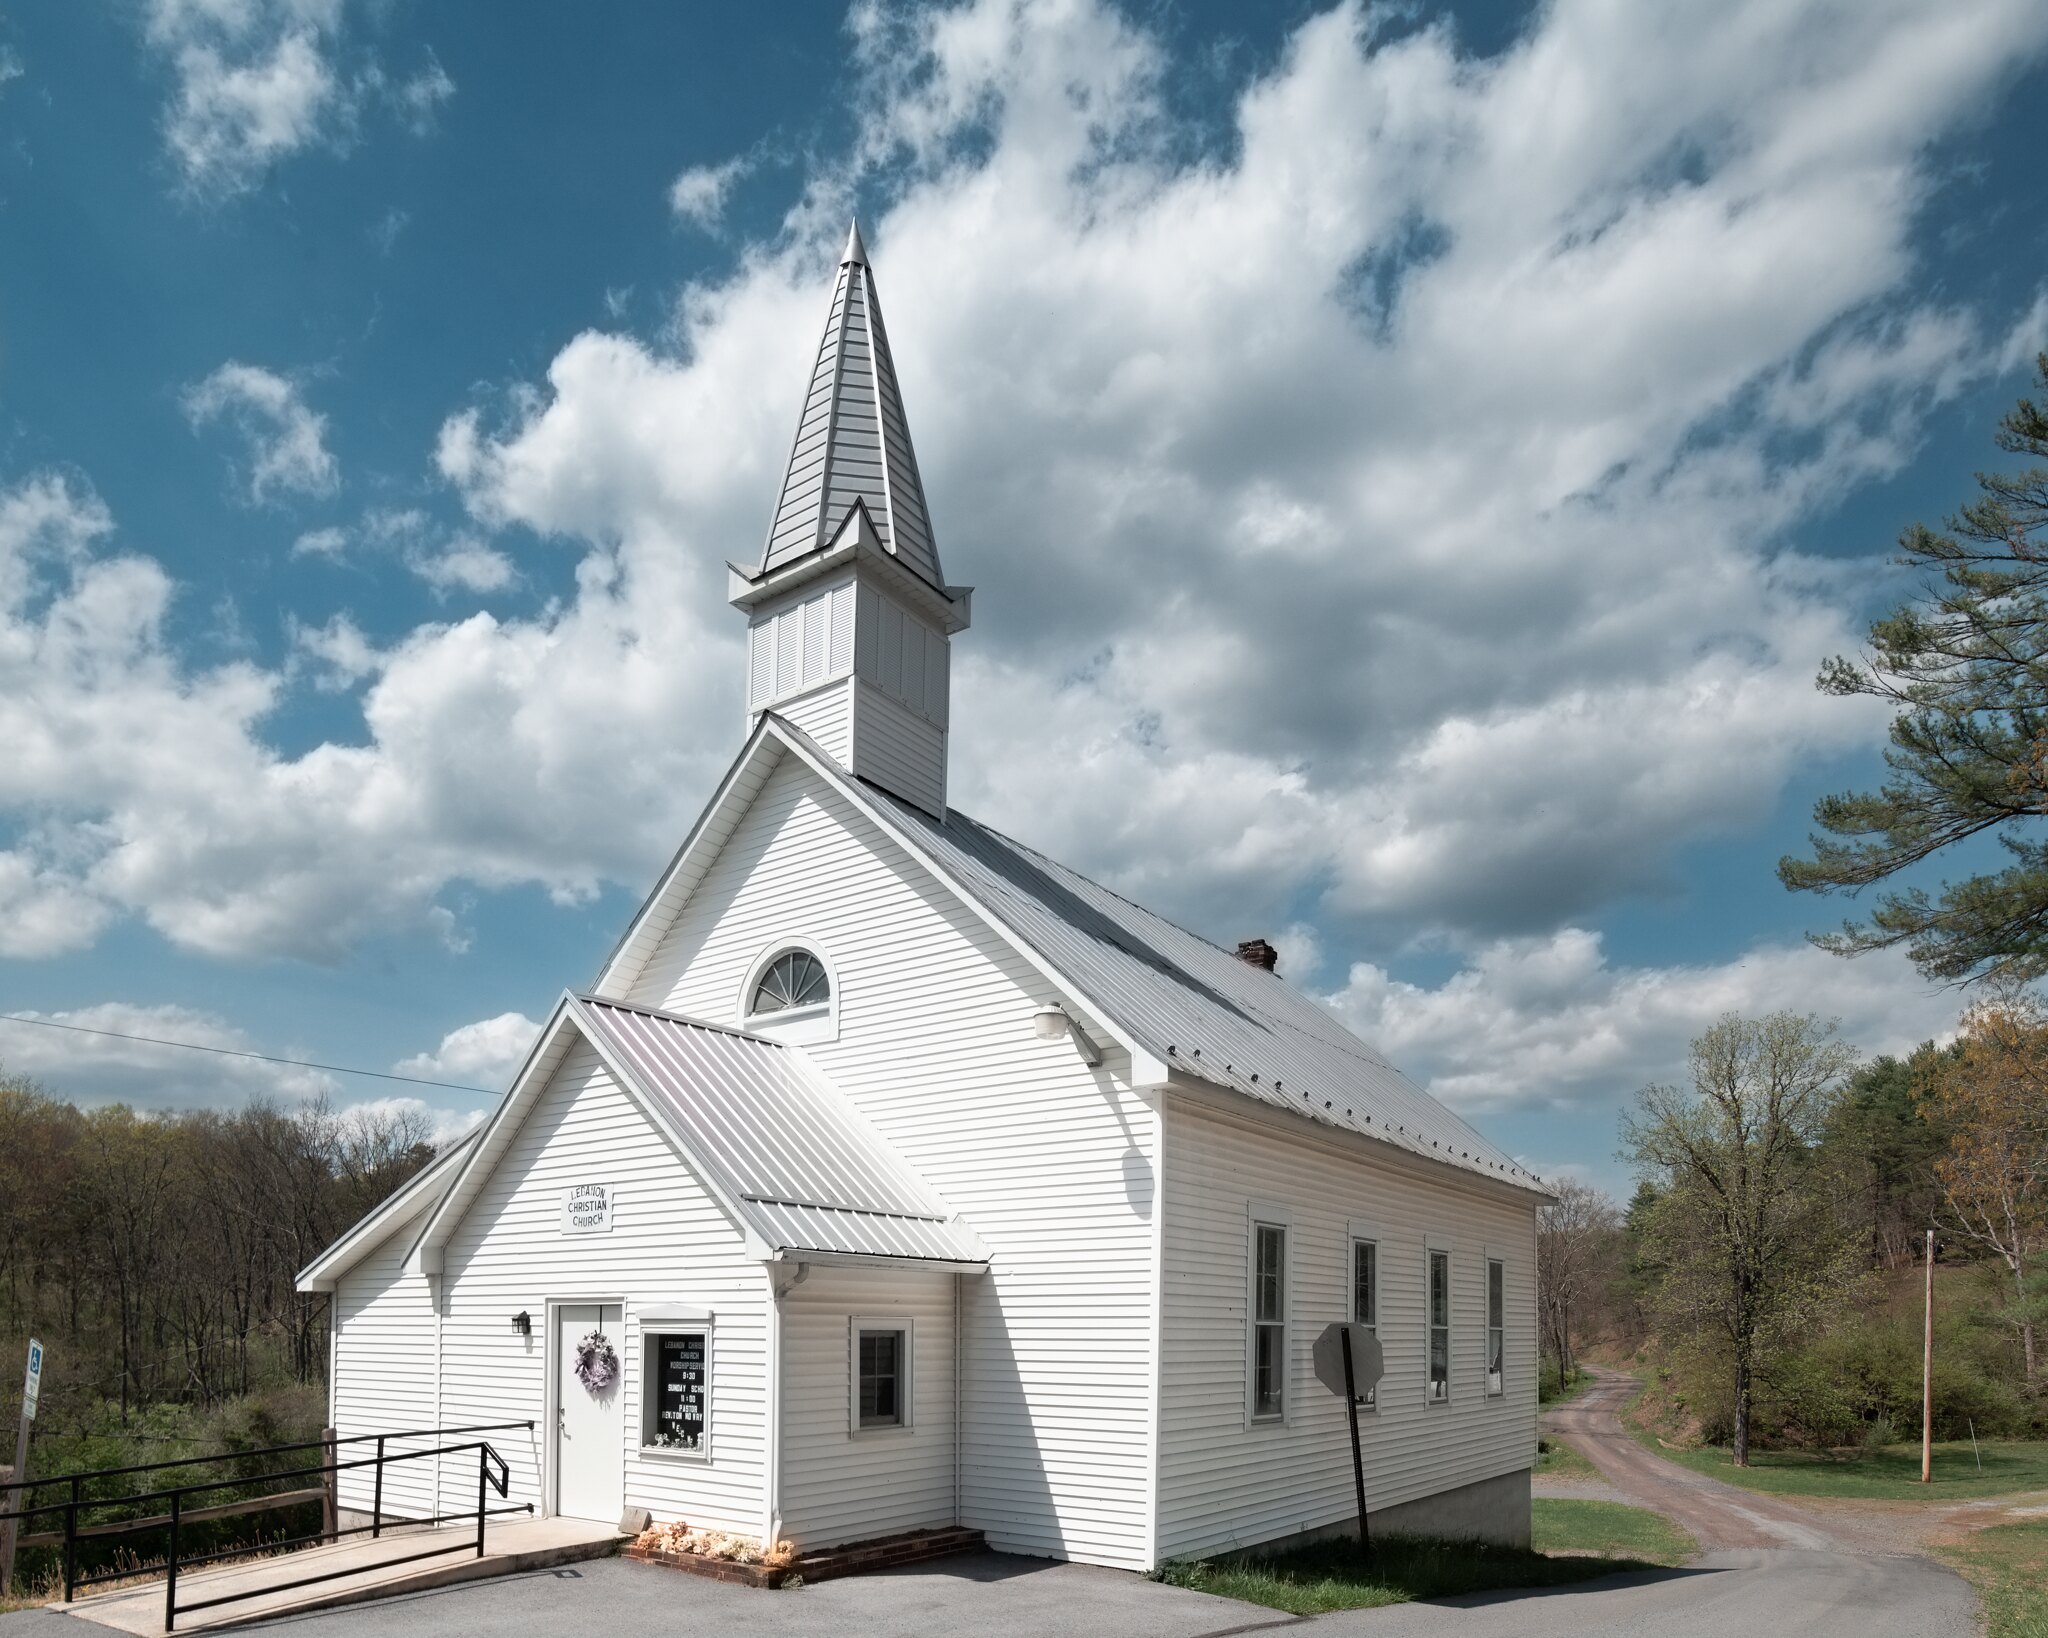   Lebanon Christian Church of Artemas, Bedford County, PA.  